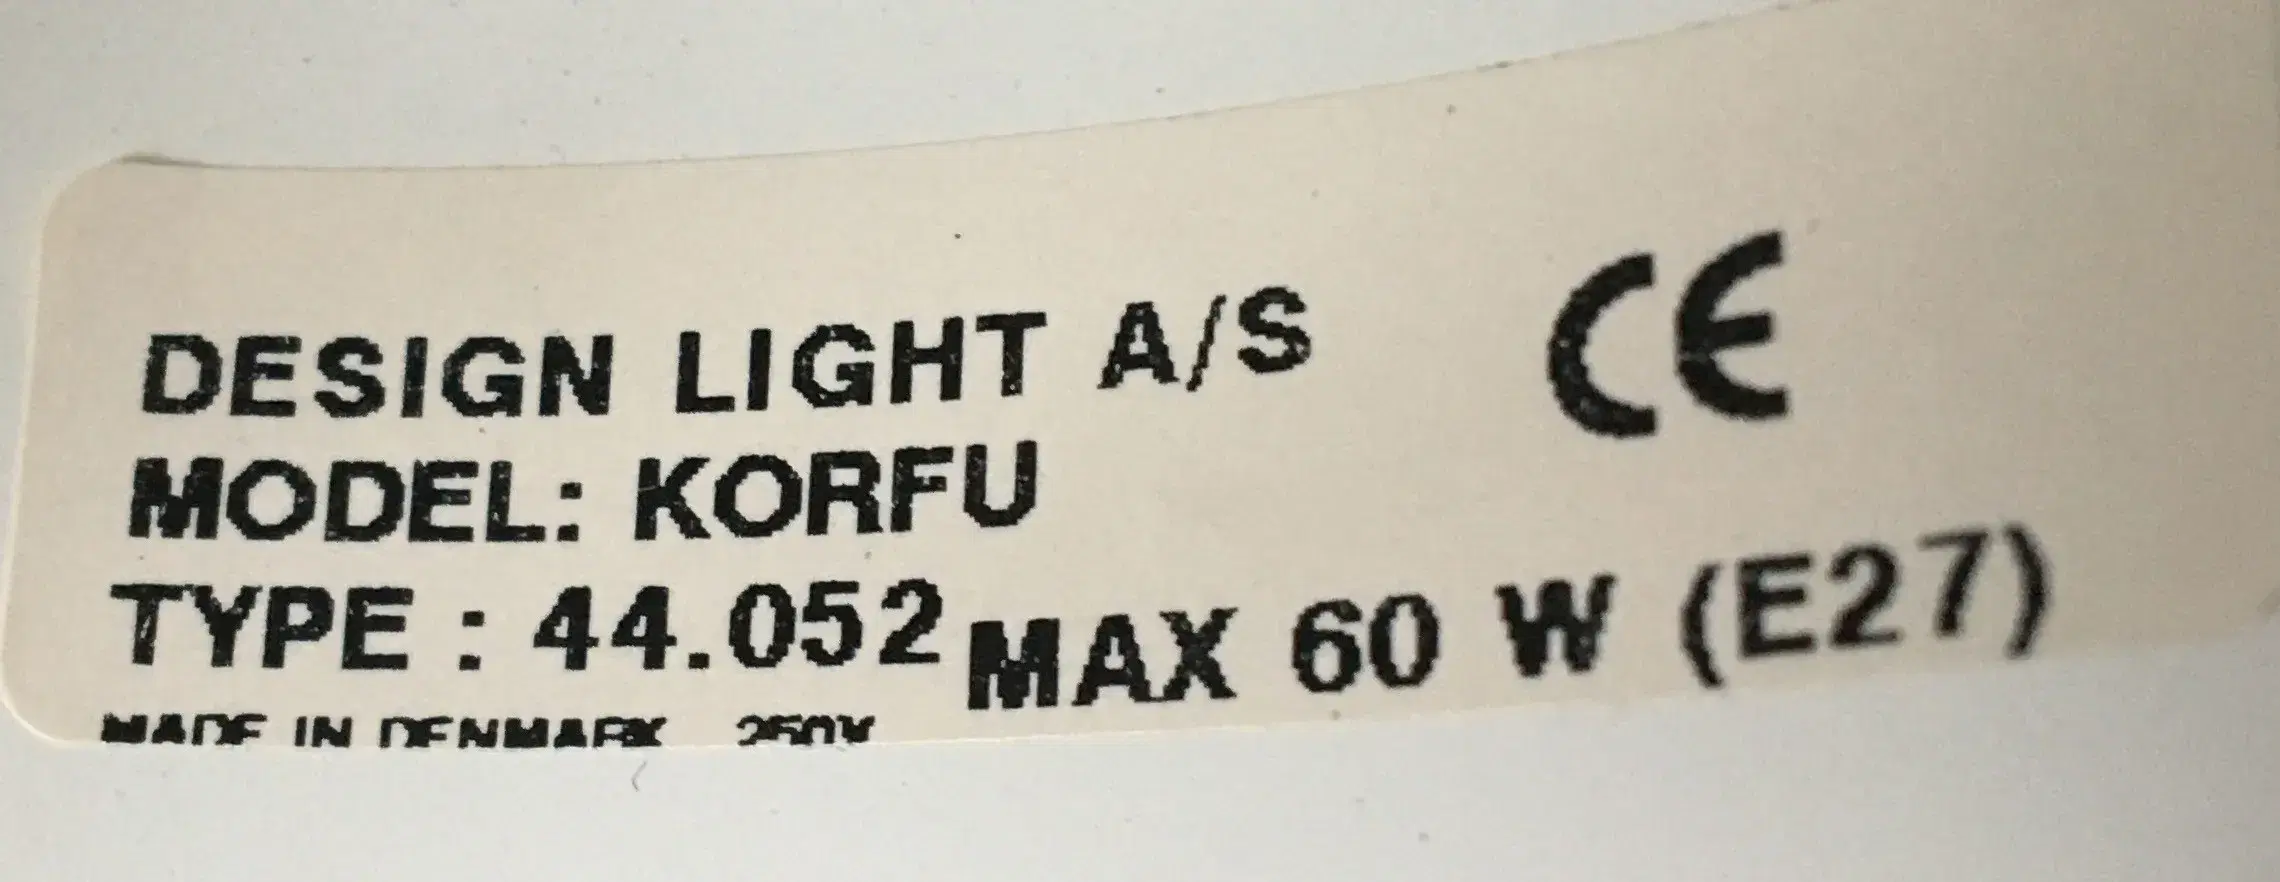 Bordlampe Design Light Model Korfu Type 44052